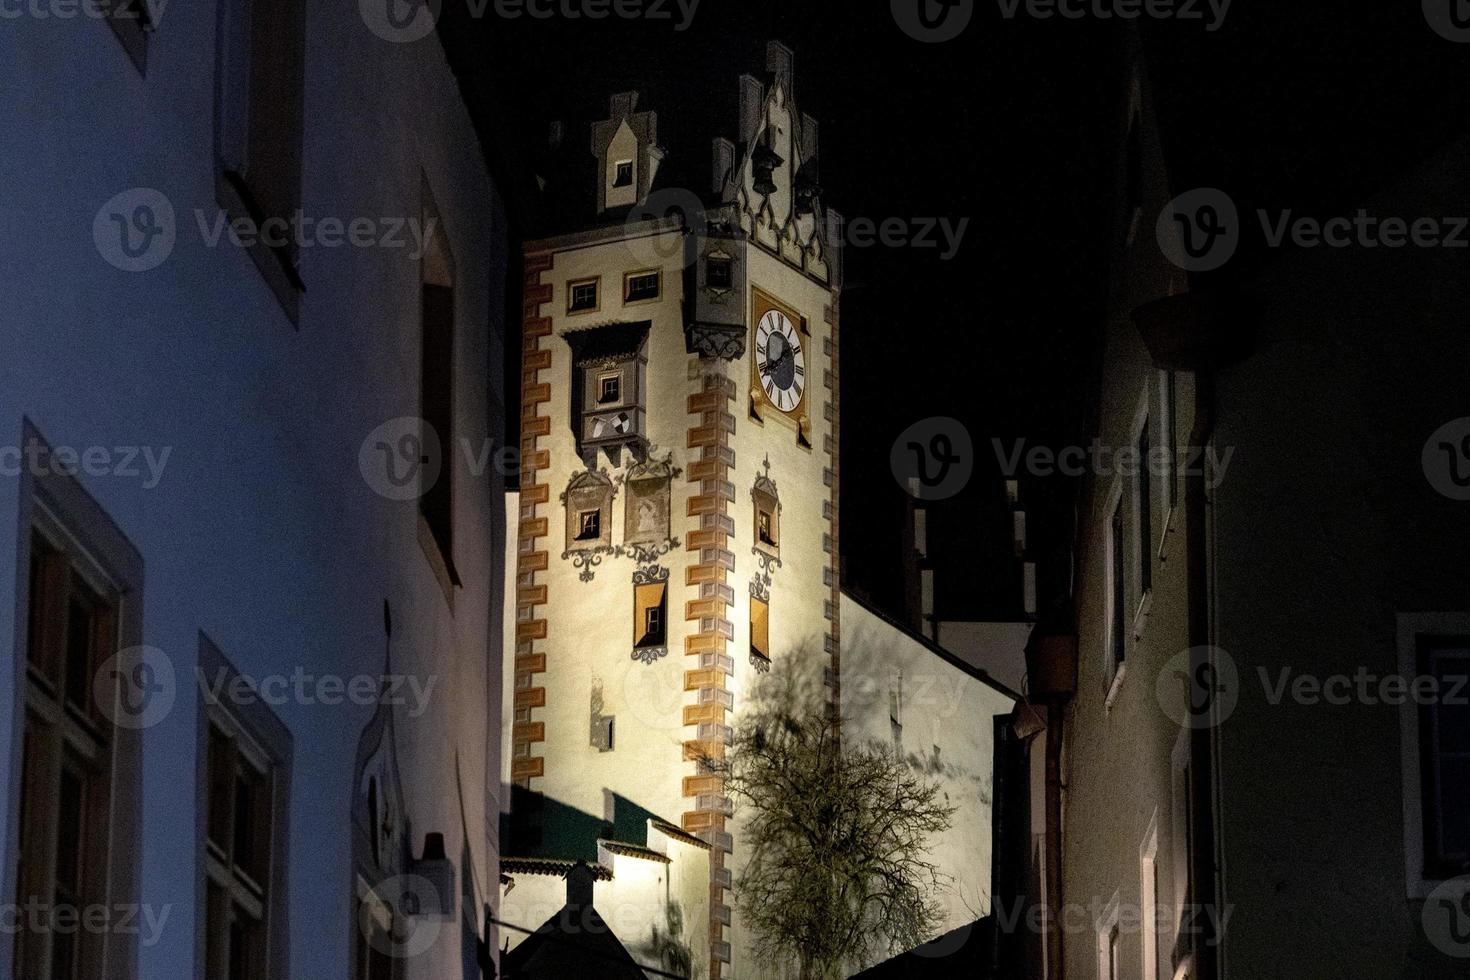 fussen Duitsland Beiers middeleeuws stad- nacht visie in december foto